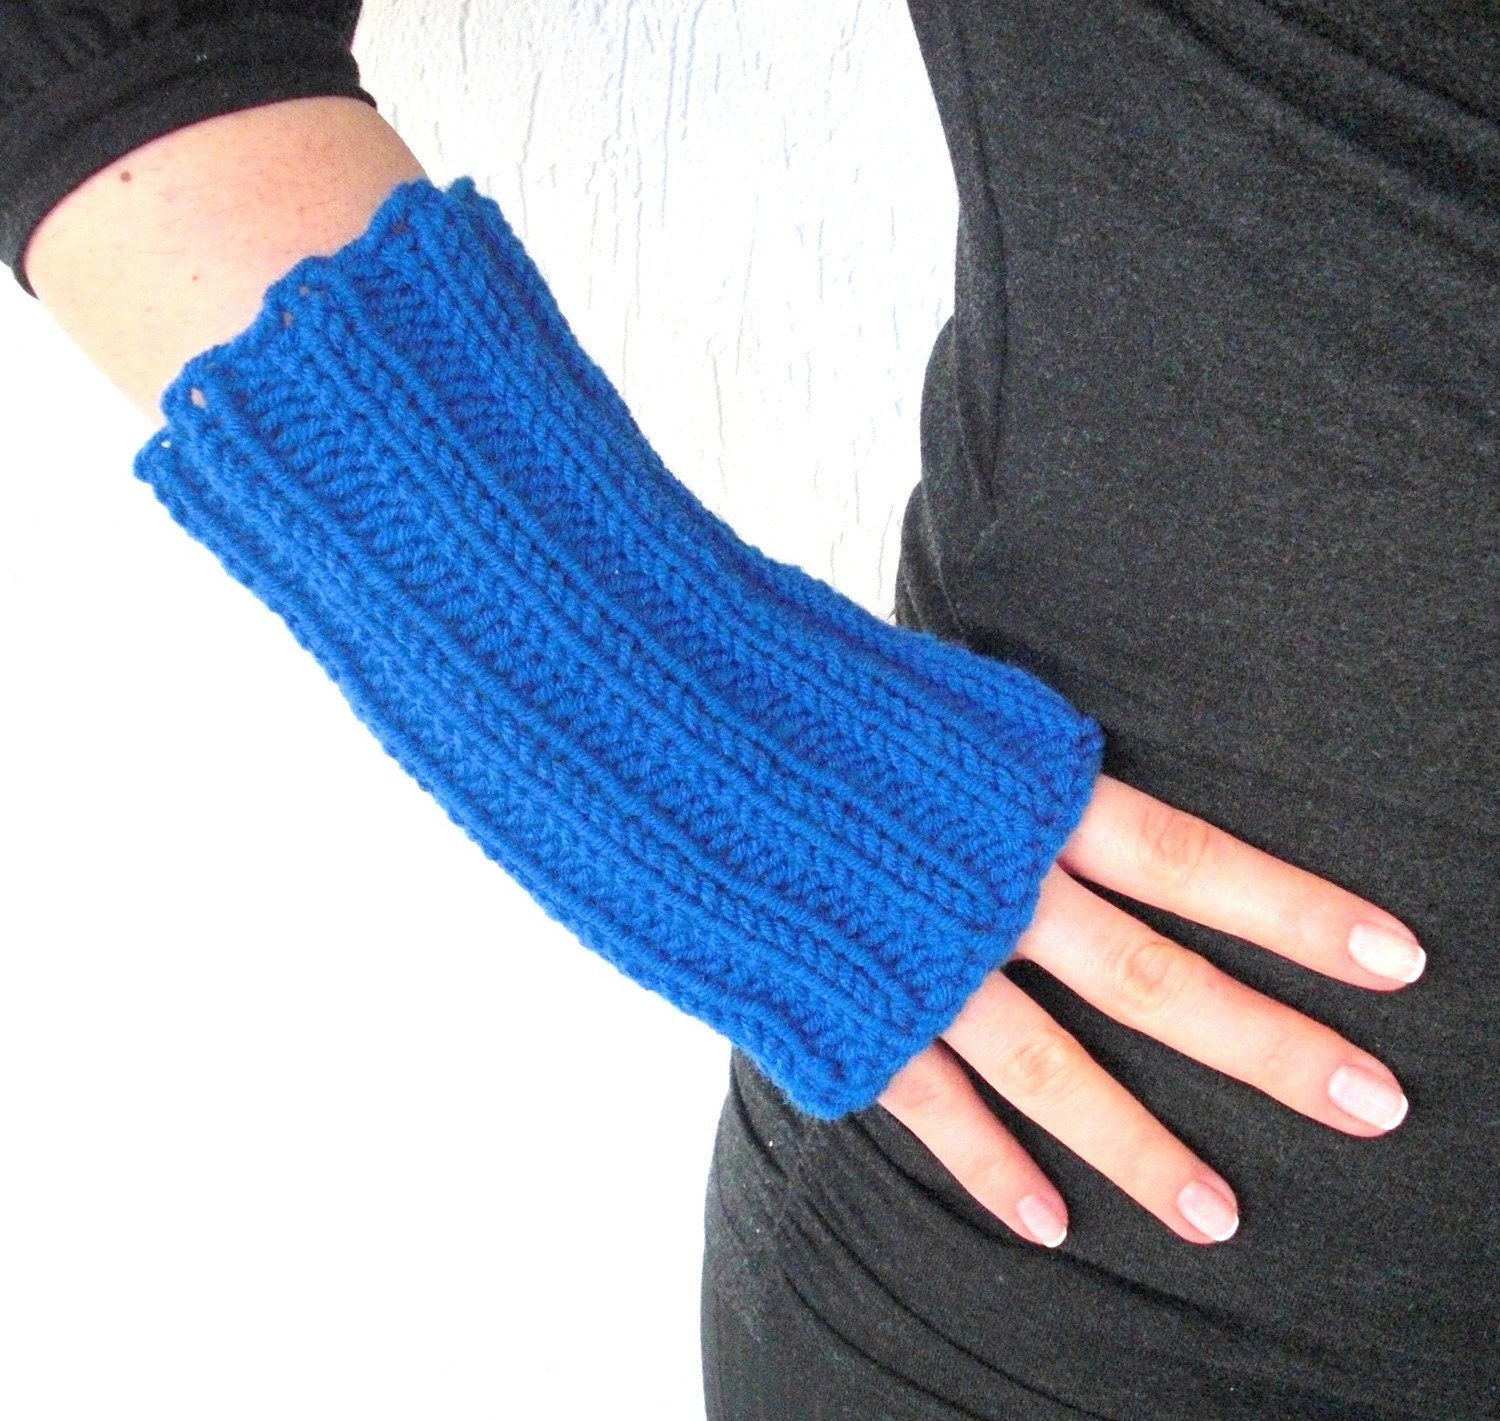 Fingerless Gloves Knitting Pattern - Free Knitting Patterns from